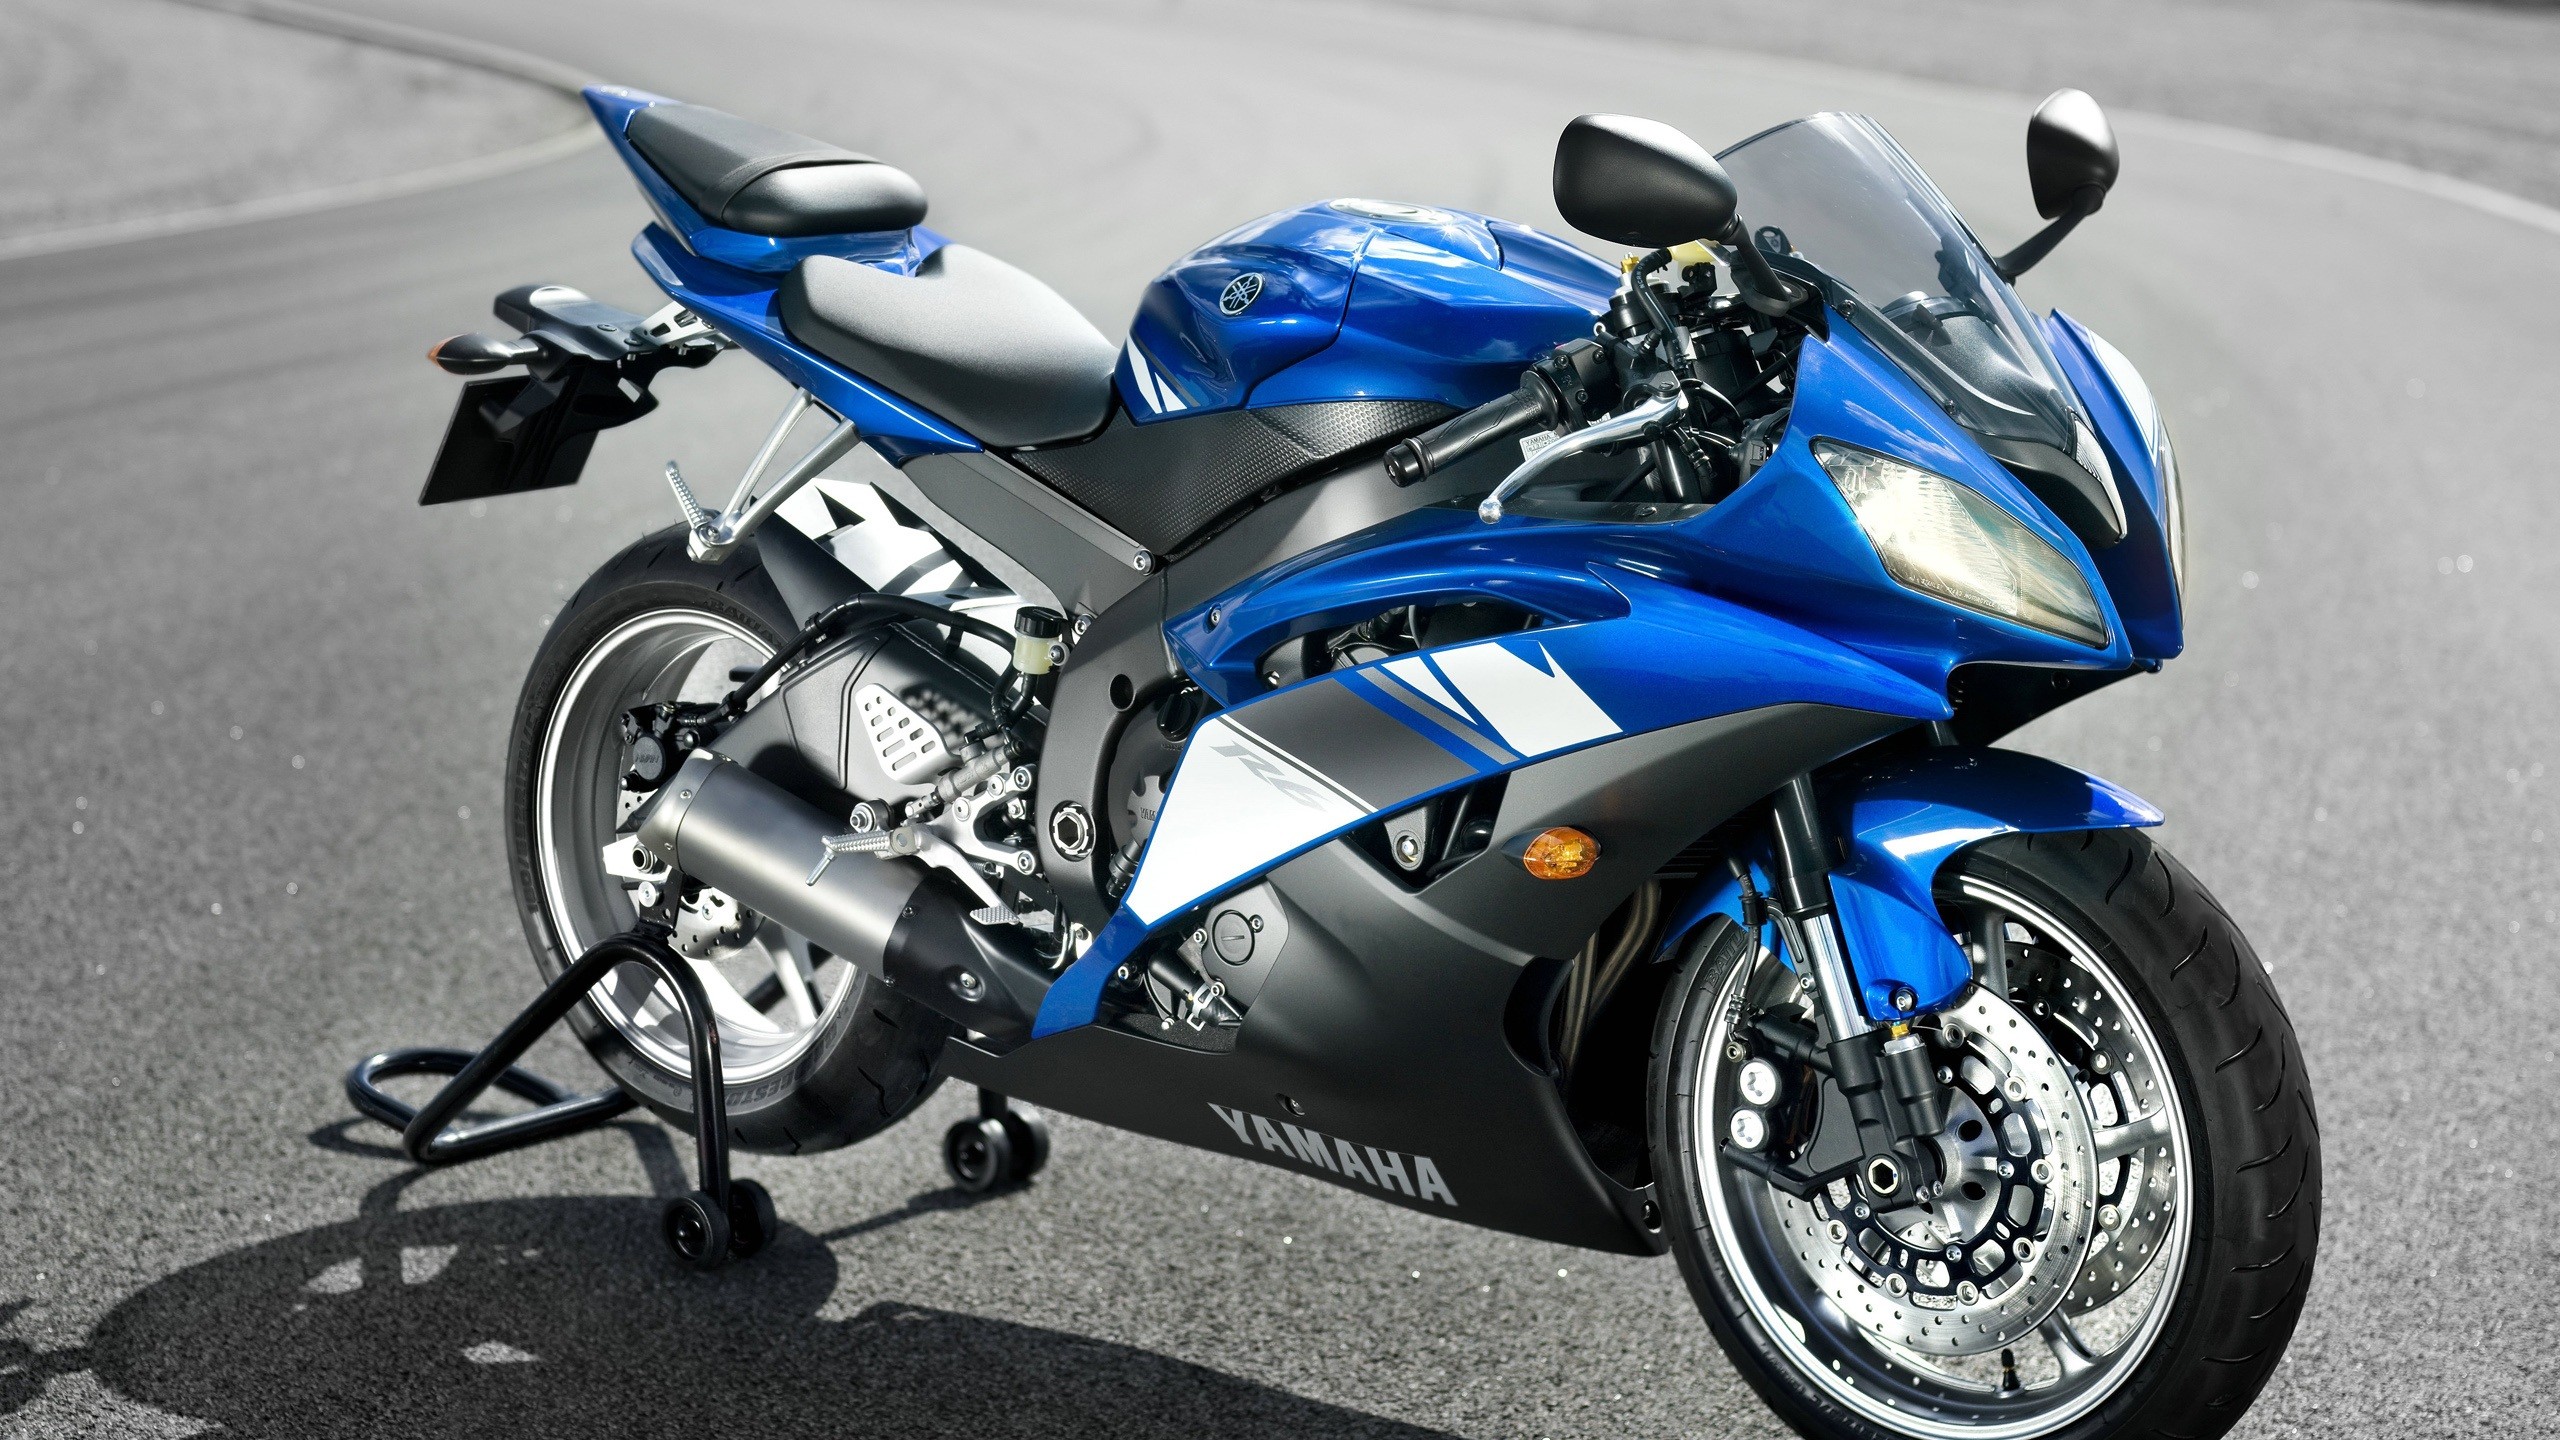 2560x1440 Yamaha Motorcycle. Download